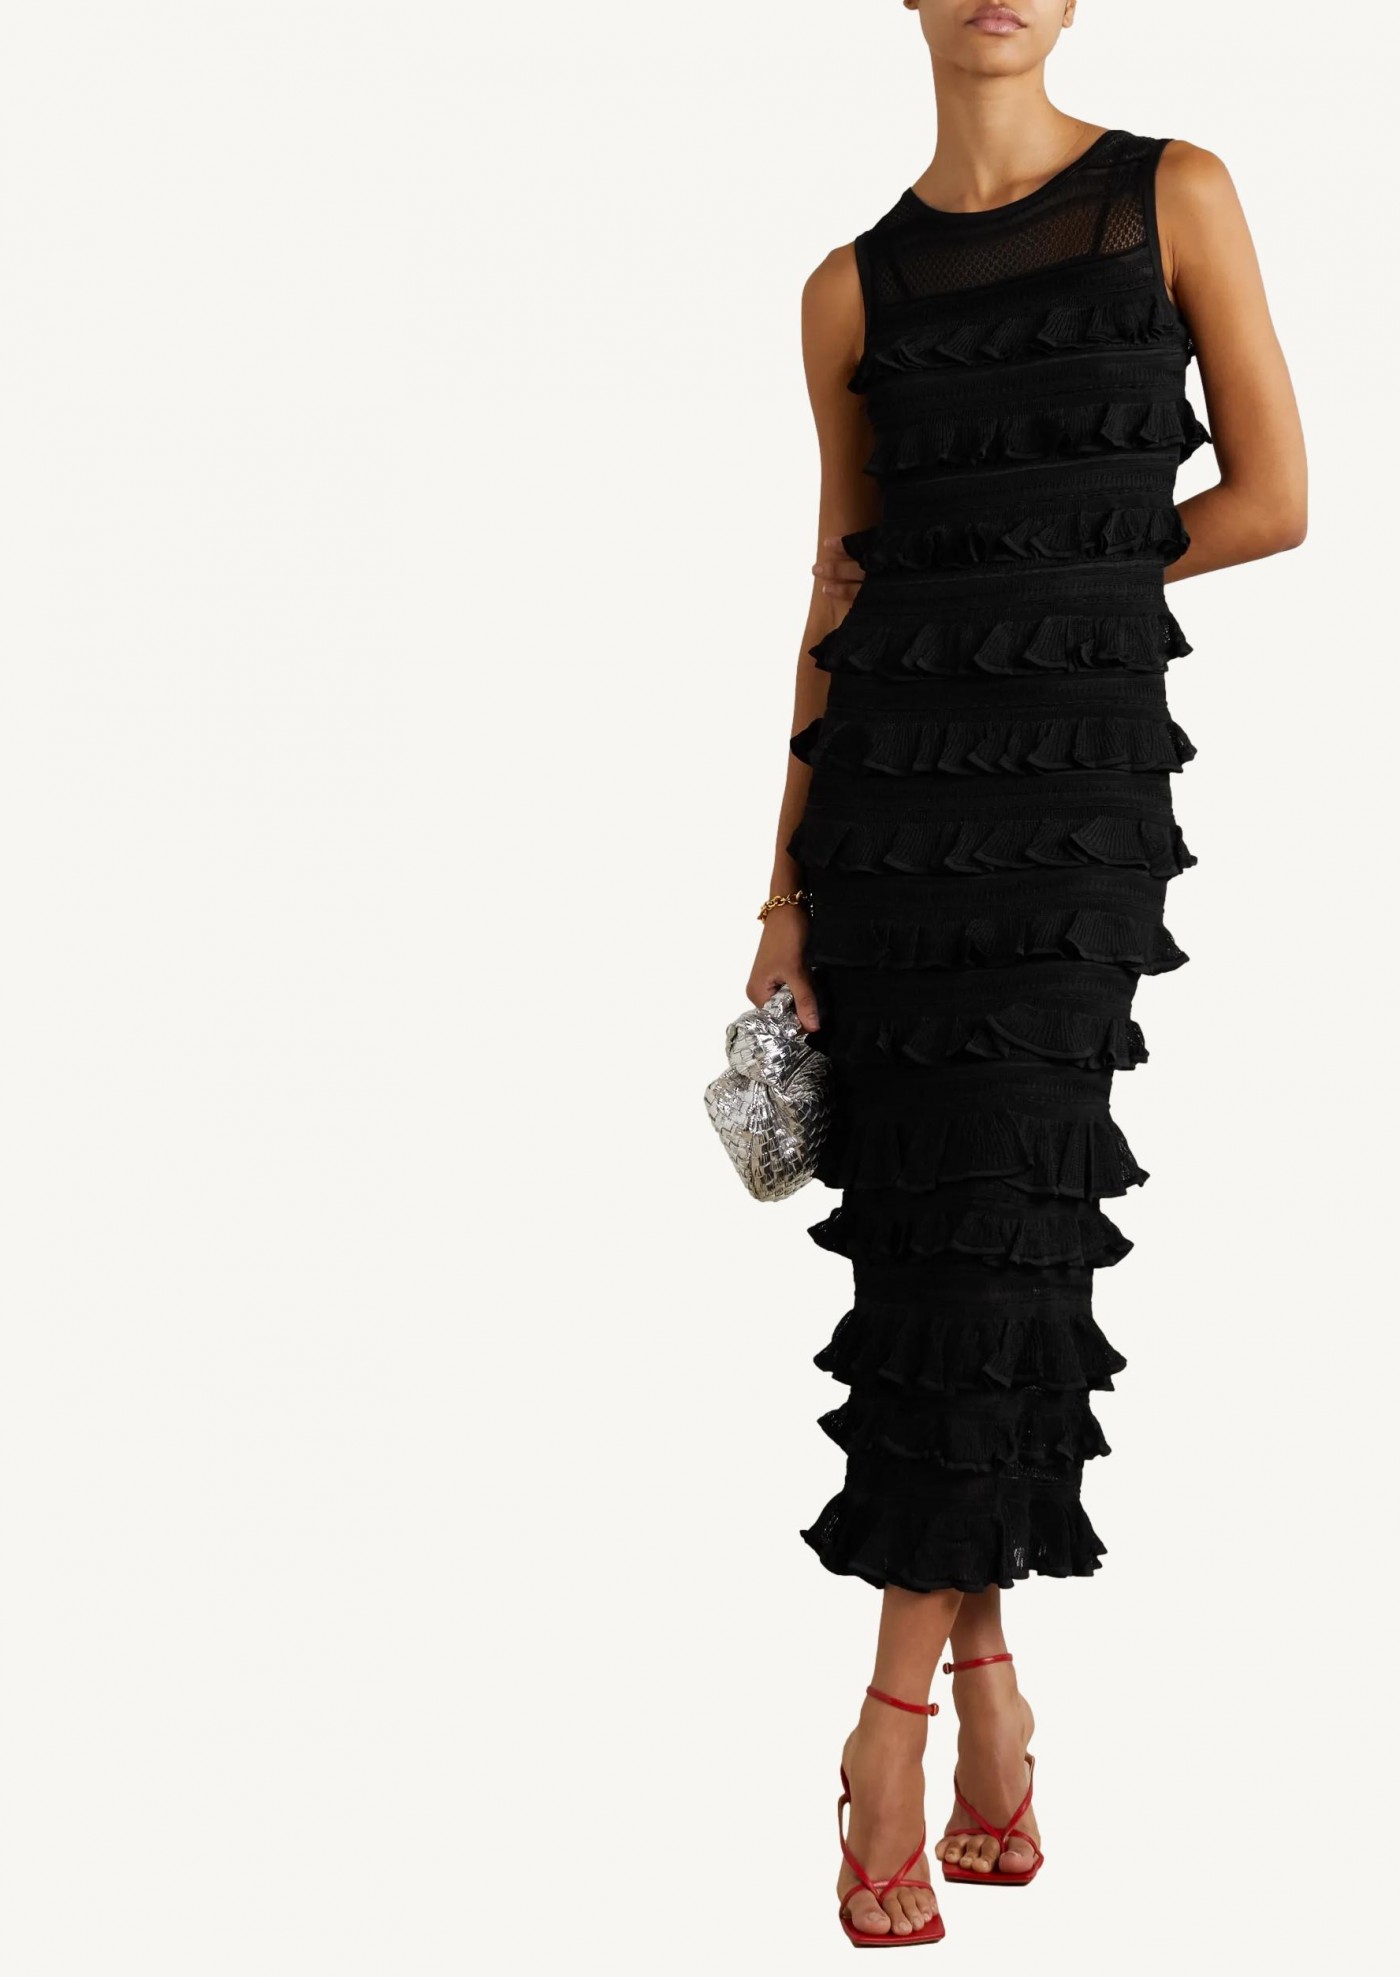 Black ruffle dress